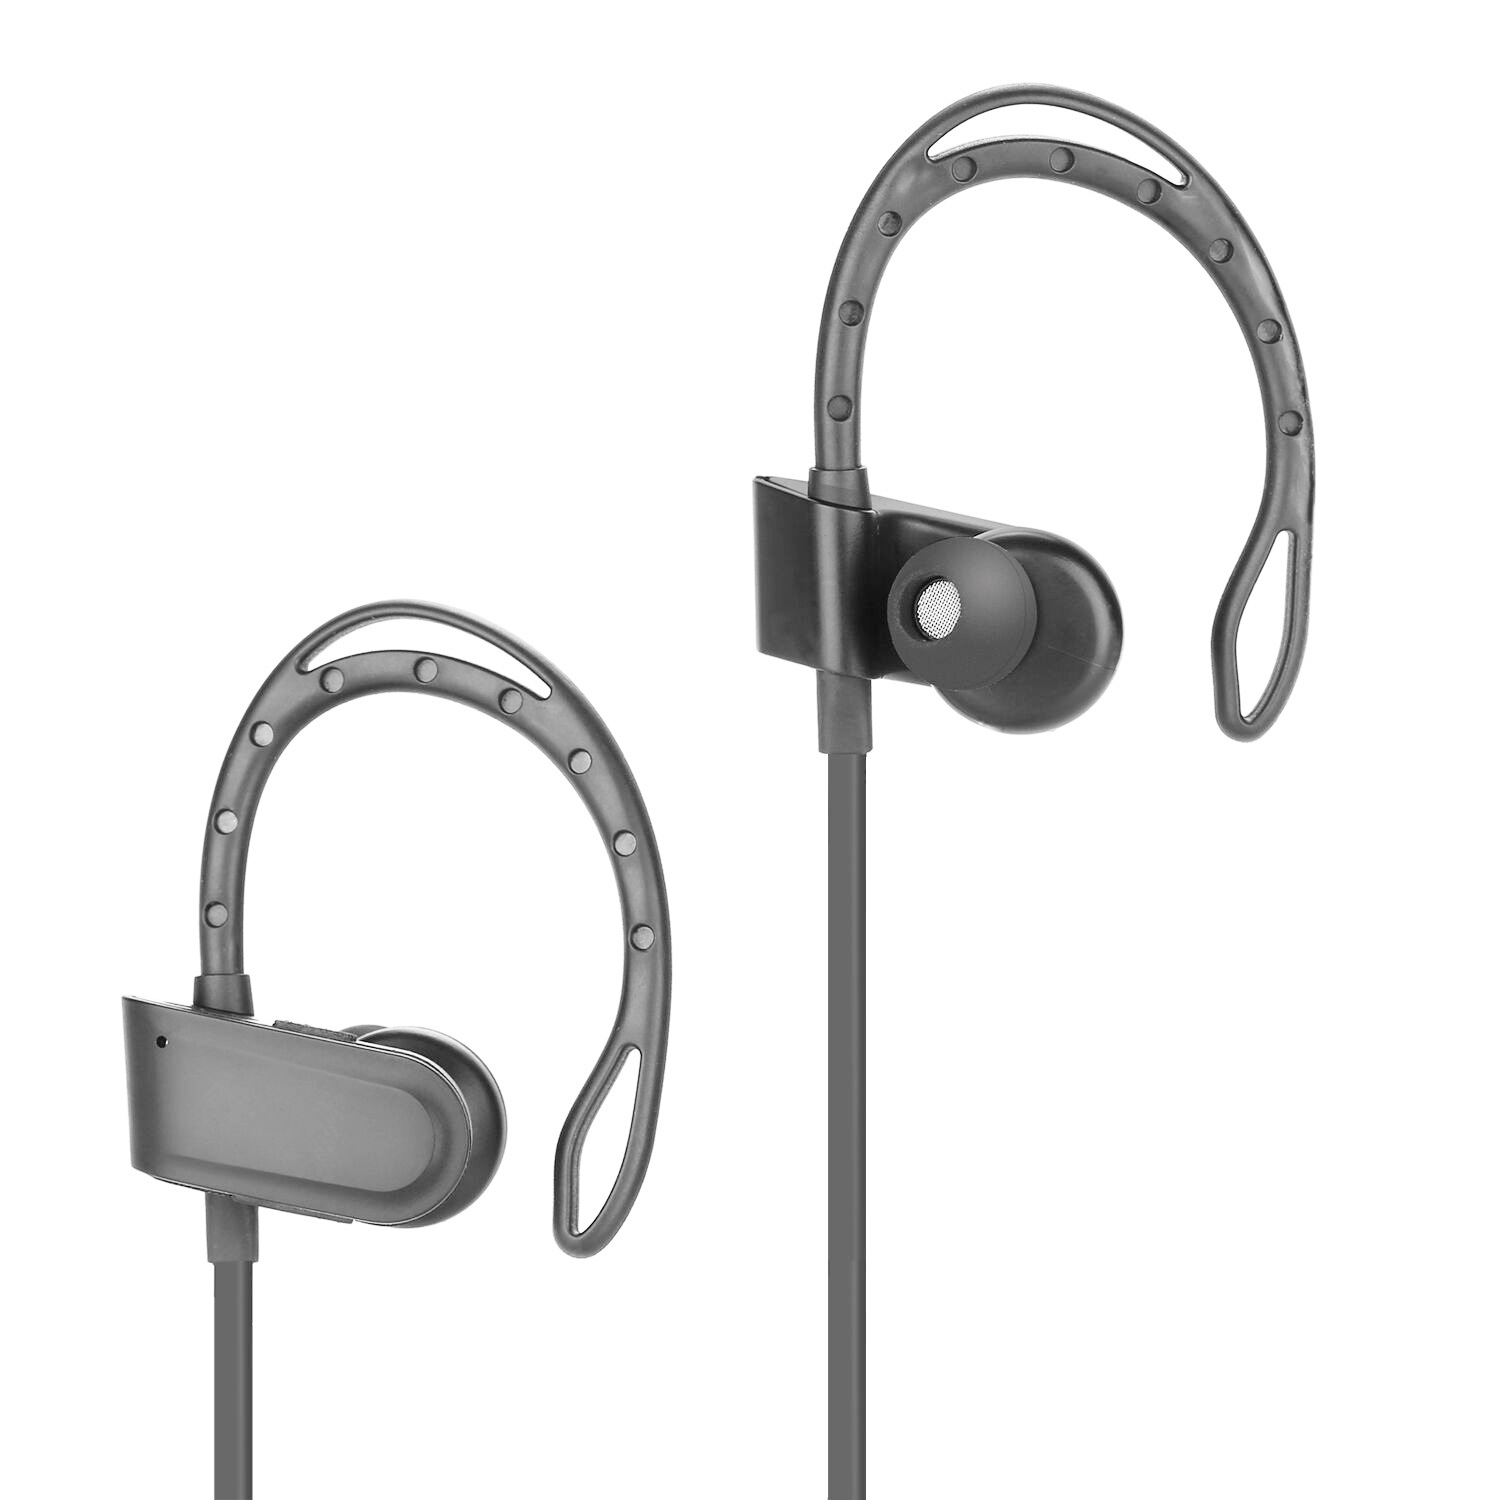 Wireless Bluetooth Headset Earphone for Iphone 7